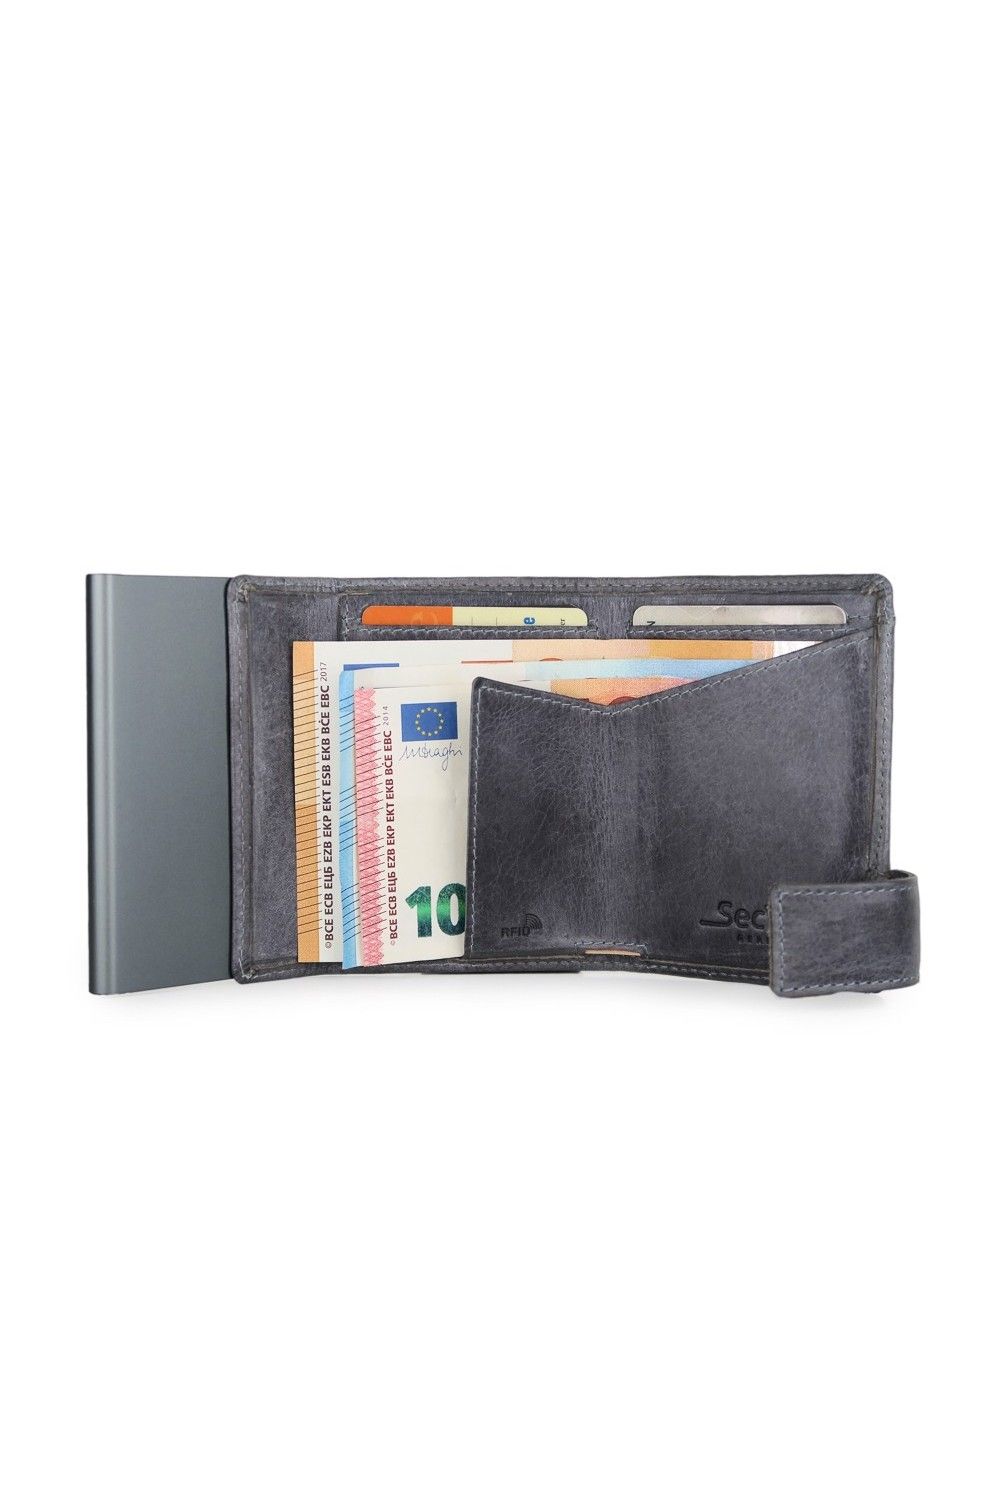 SecWal Card Case DK Leather Vintage Grey